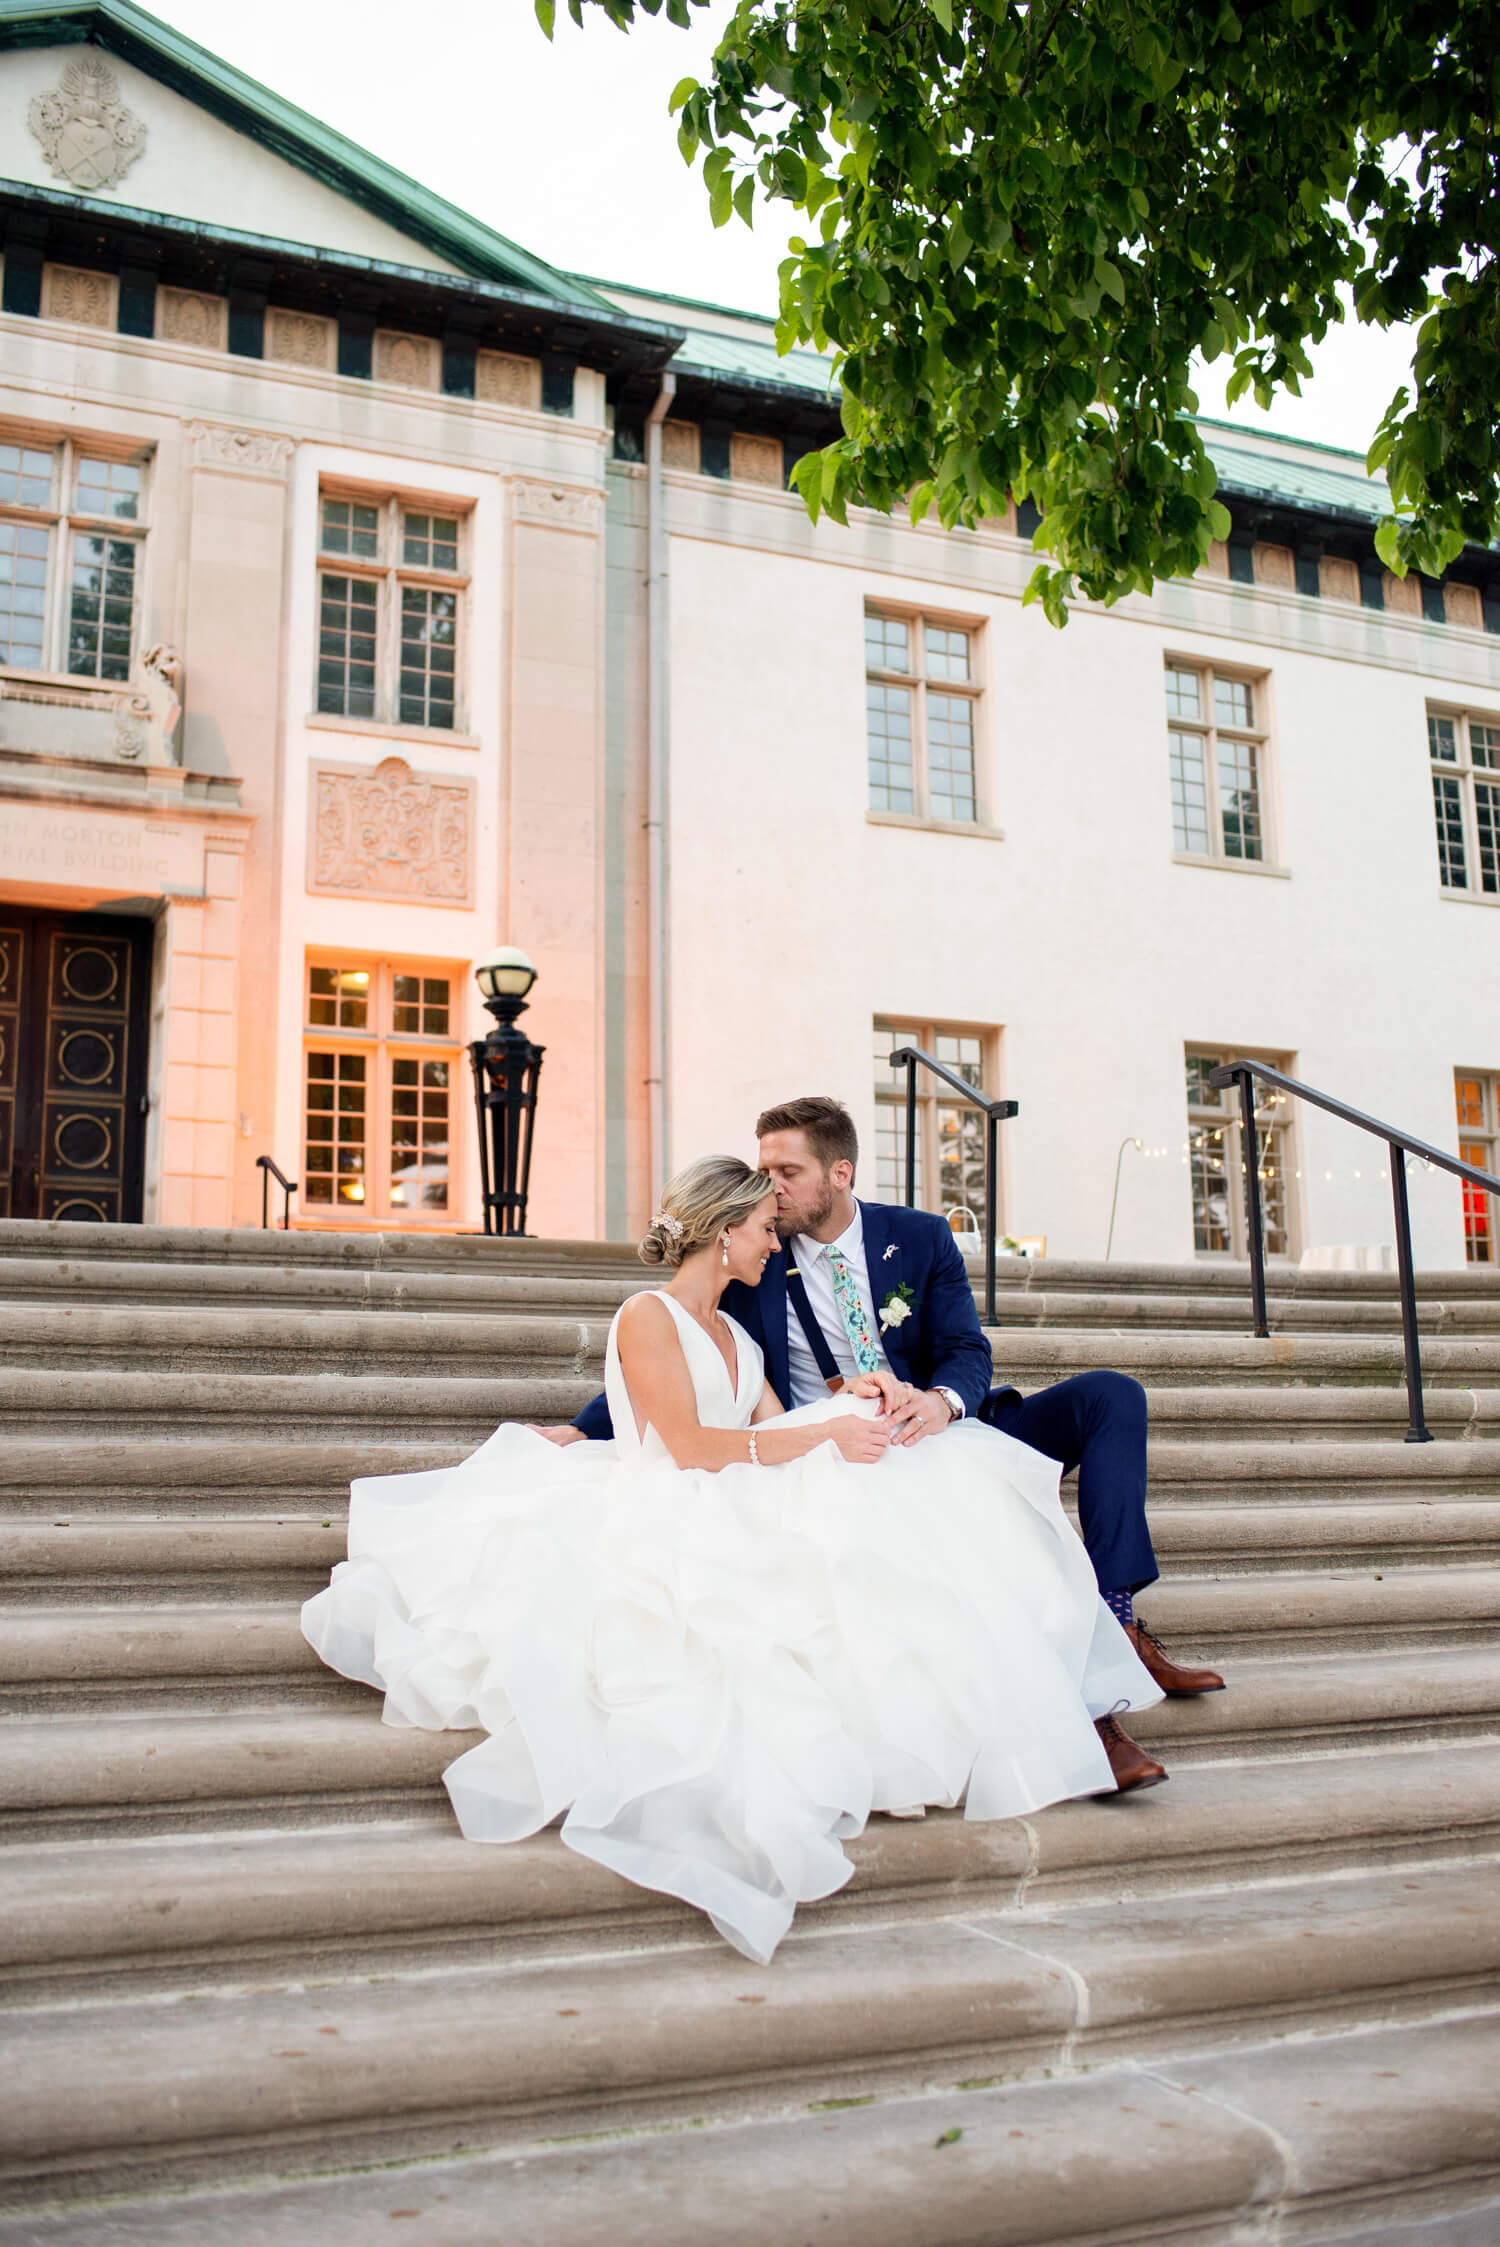 ALN Images captures bride and groom portrait. Philadelphia wedding photographer.